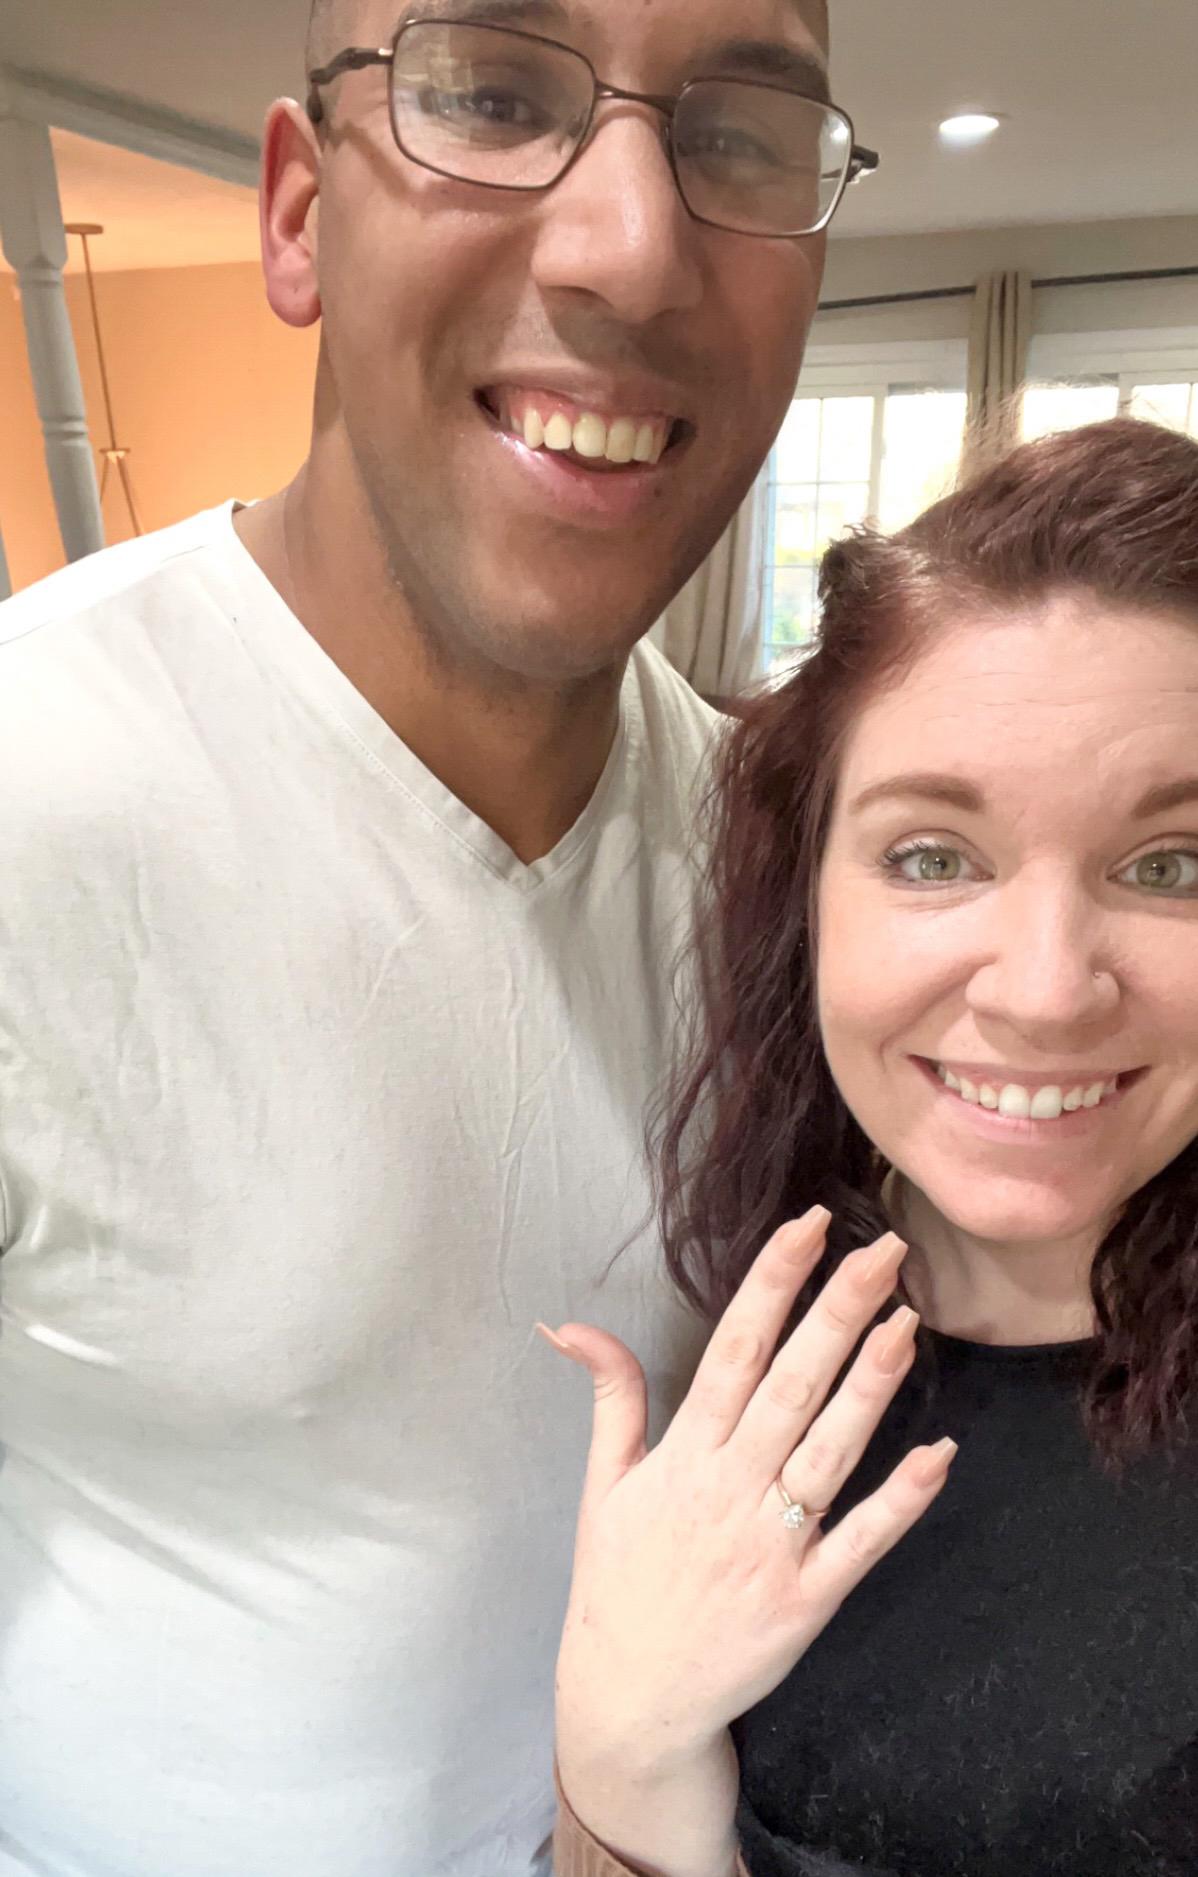 She said yes!!!